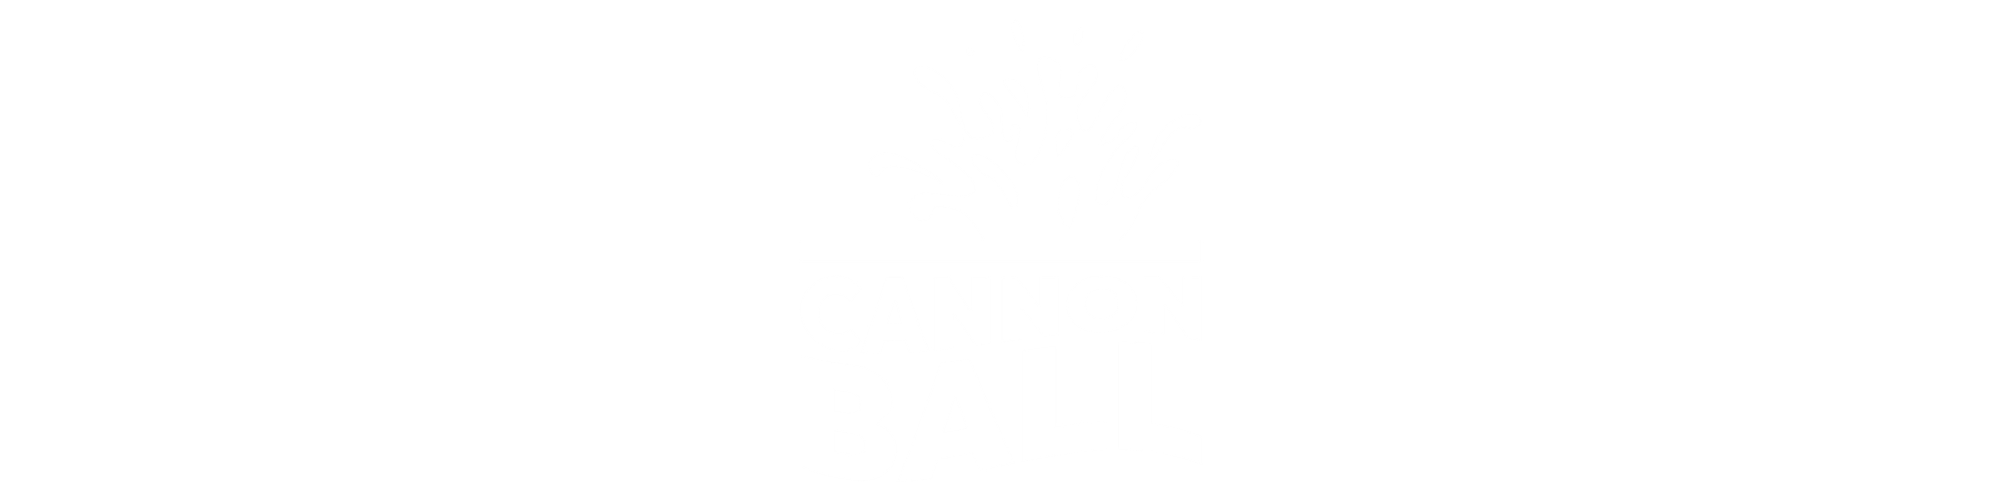 splash clipart cannonball